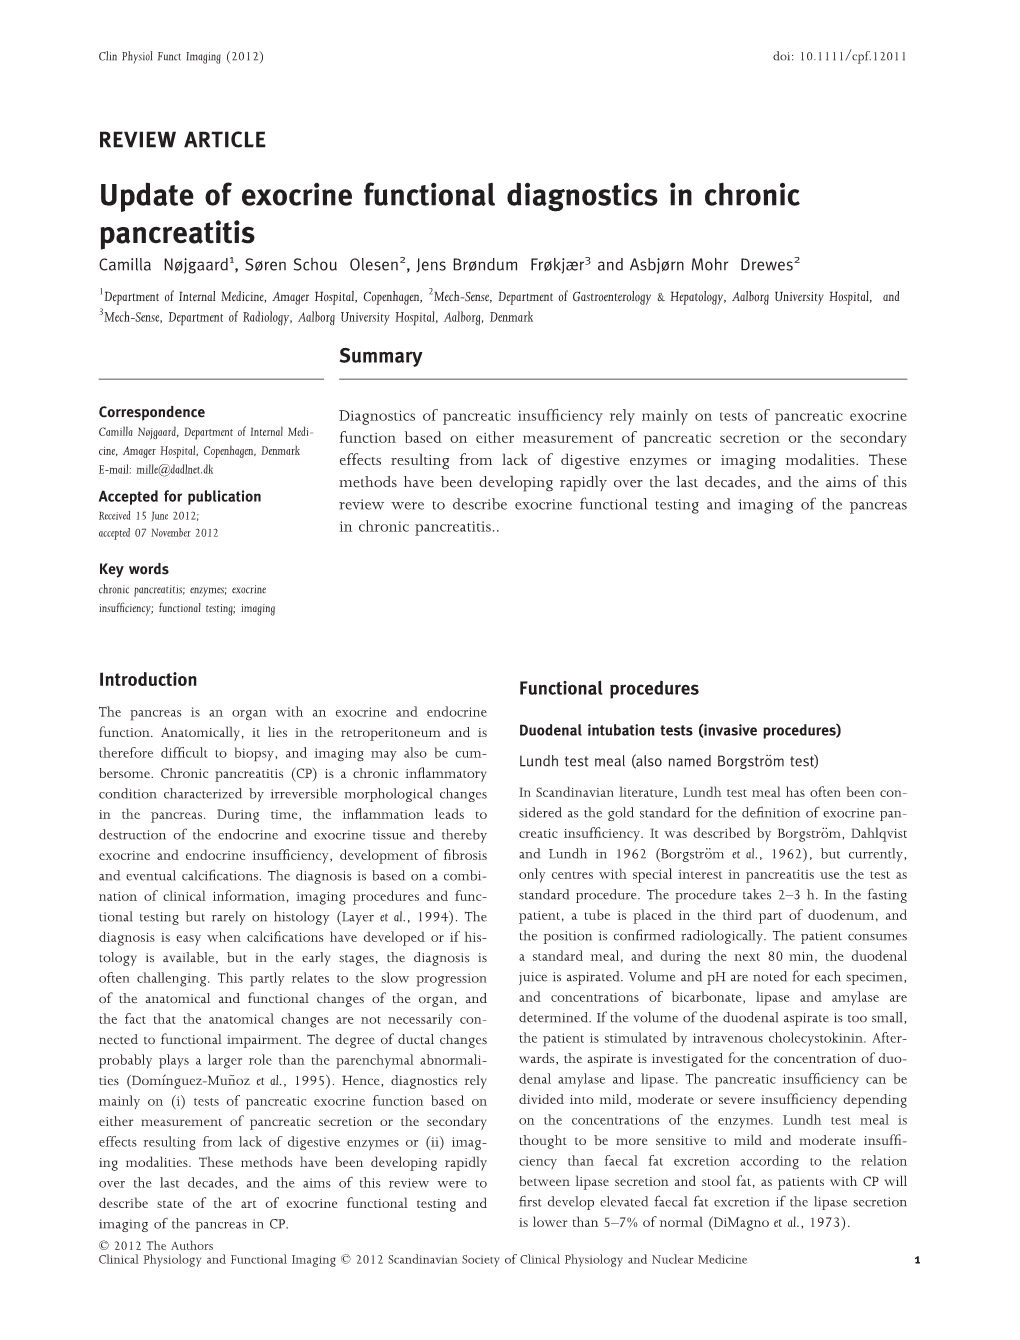 Update of Exocrine Functional Diagnostics in Chronic Pancreatitis Camilla Nøjgaard1, Søren Schou Olesen2, Jens Brøndum Frøkjær3 and Asbjørn Mohr Drewes2